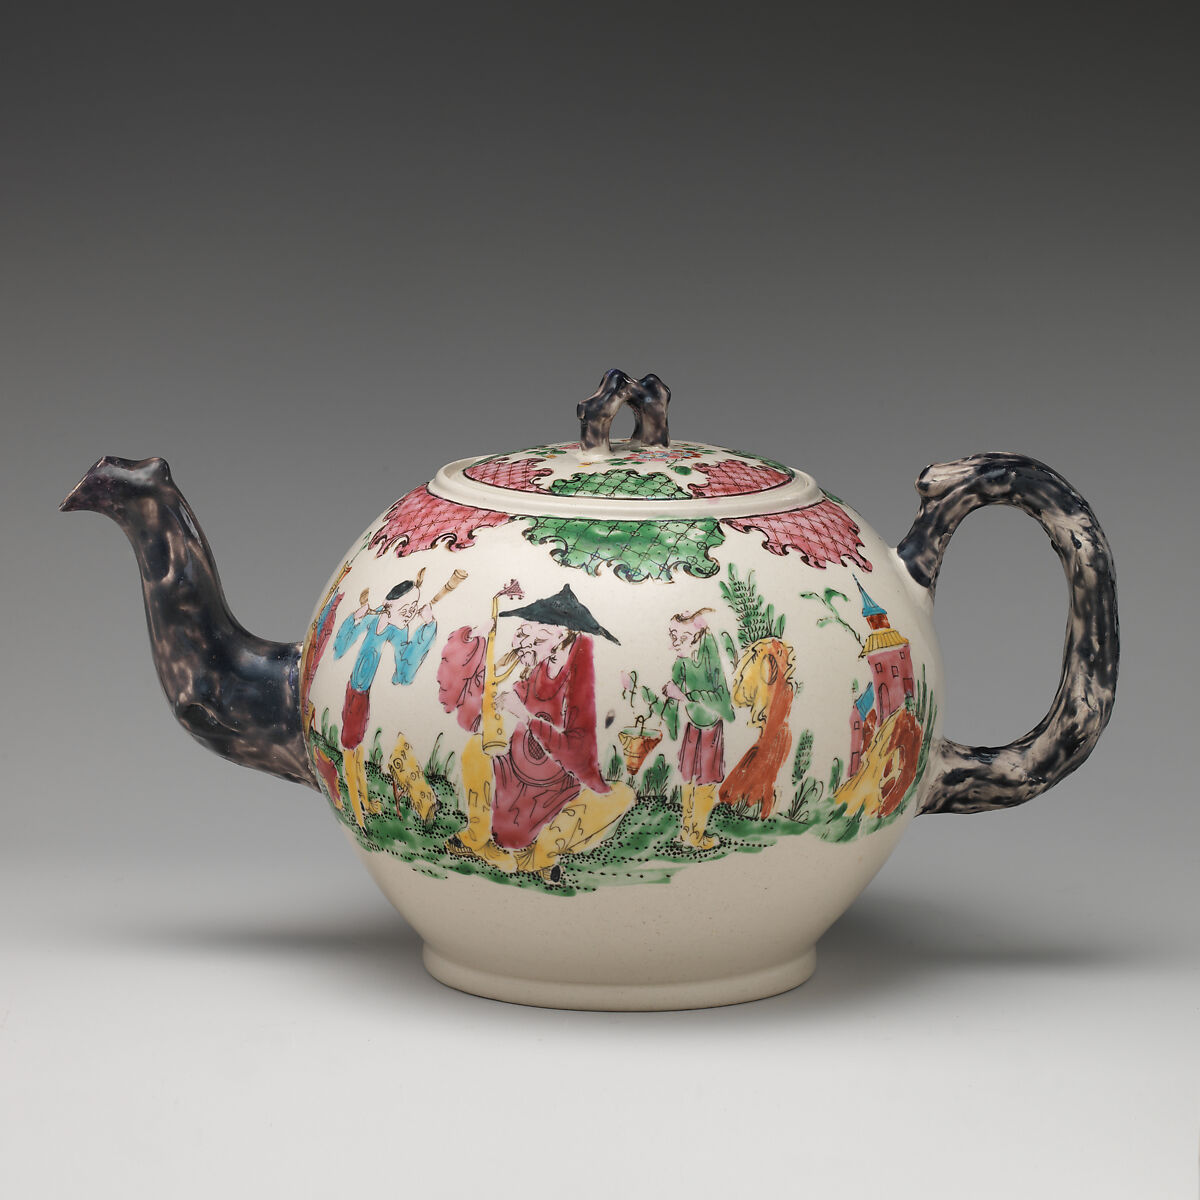 Punch pot, Salt-glazed stoneware with enamel decoration, British, Staffordshire 